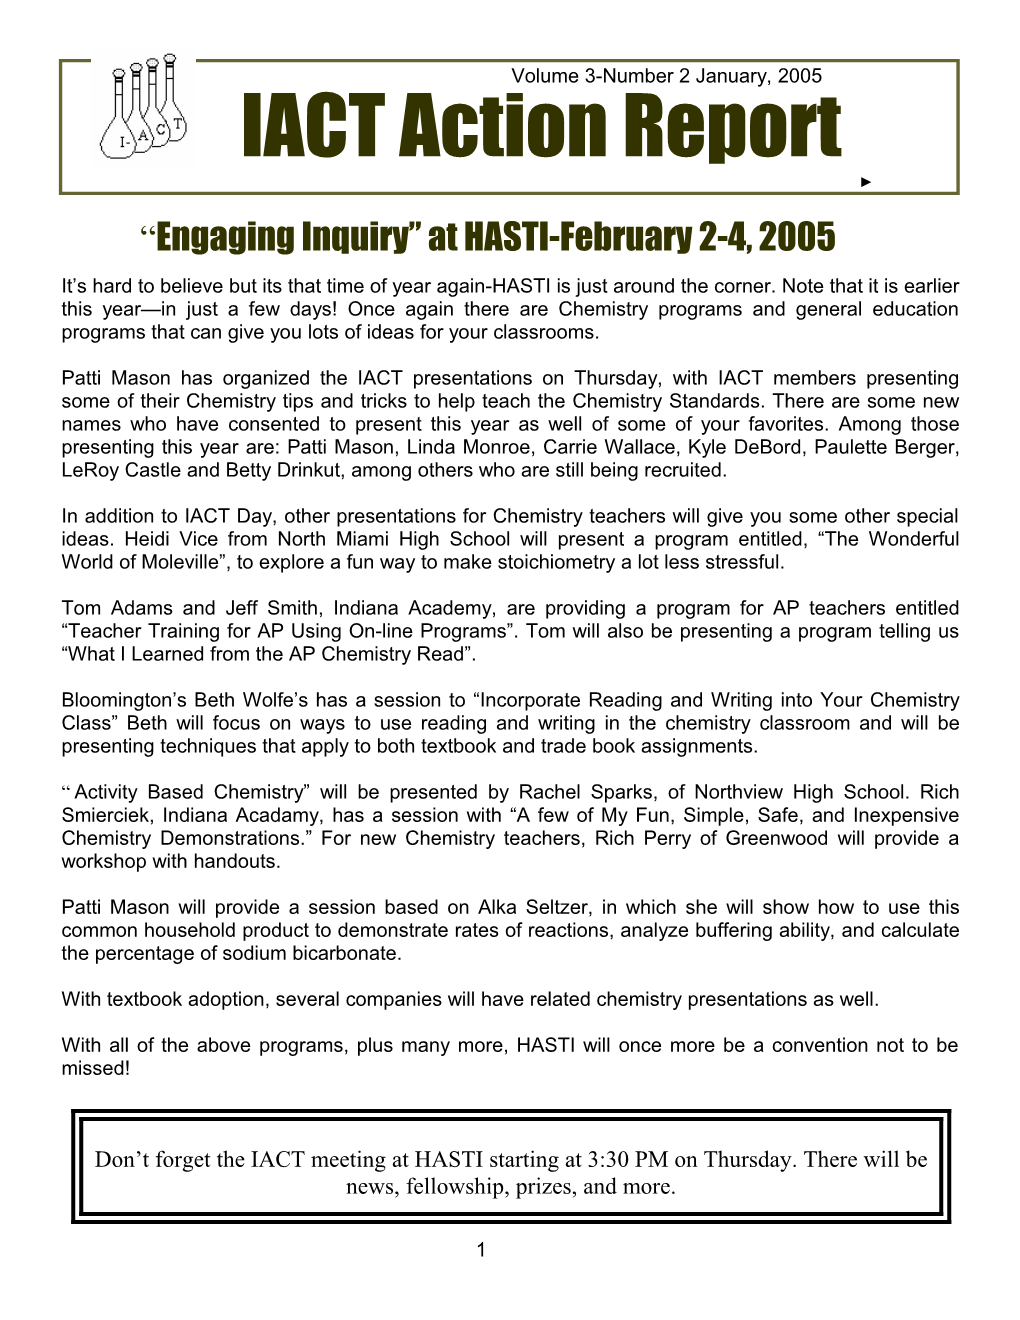 Engaging Inquiry at HASTI-February 2-4, 2005